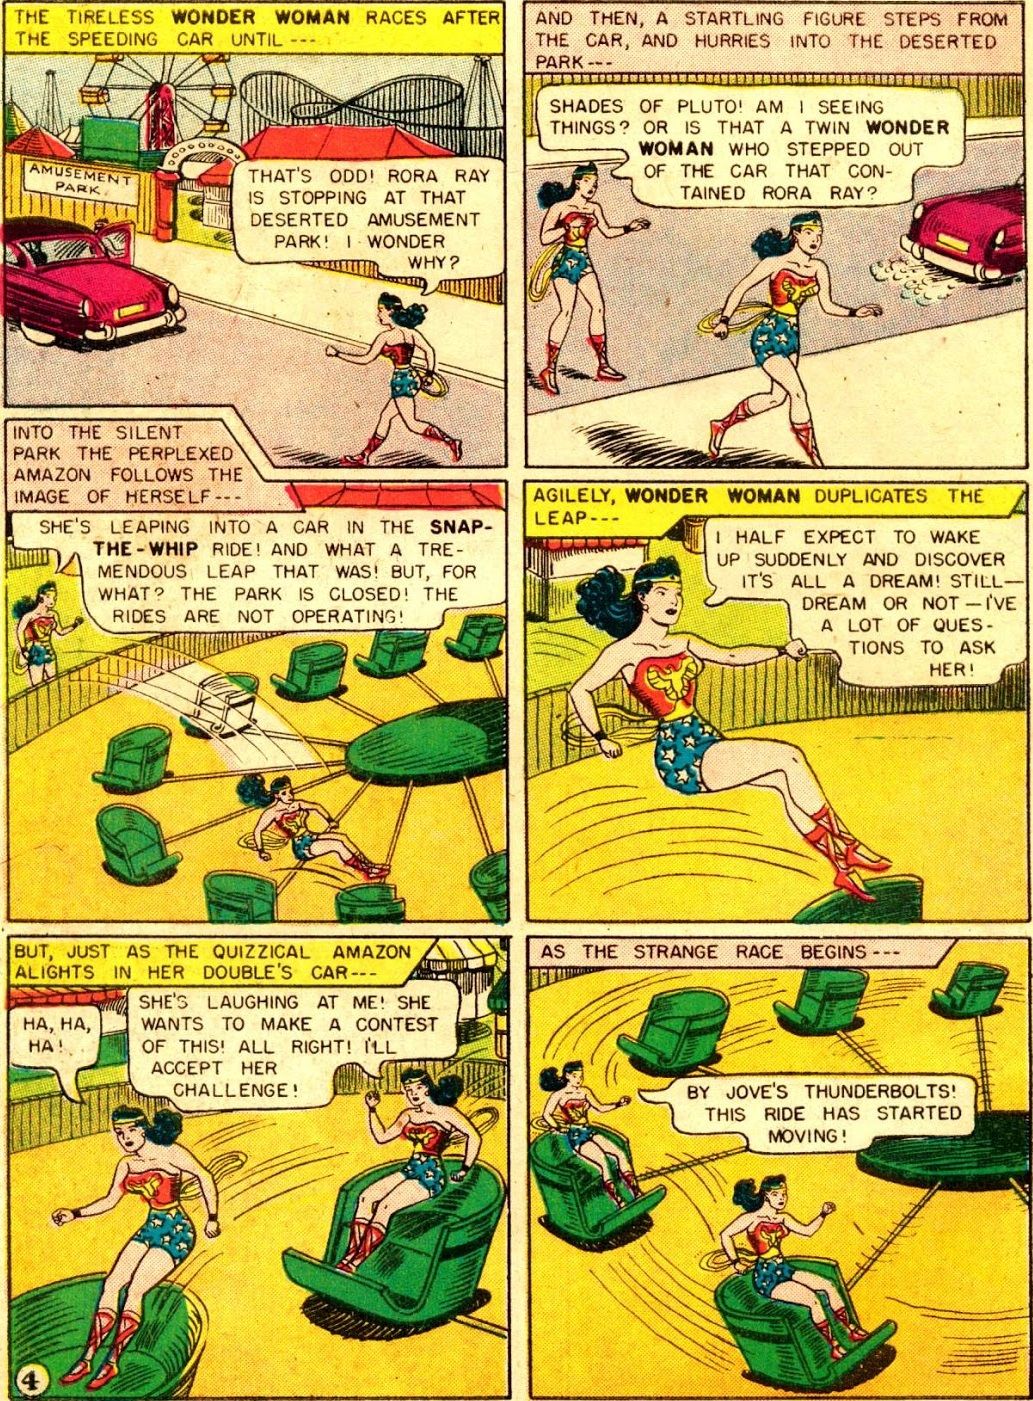 A Collection of Wonder Woman Robot Duplicates